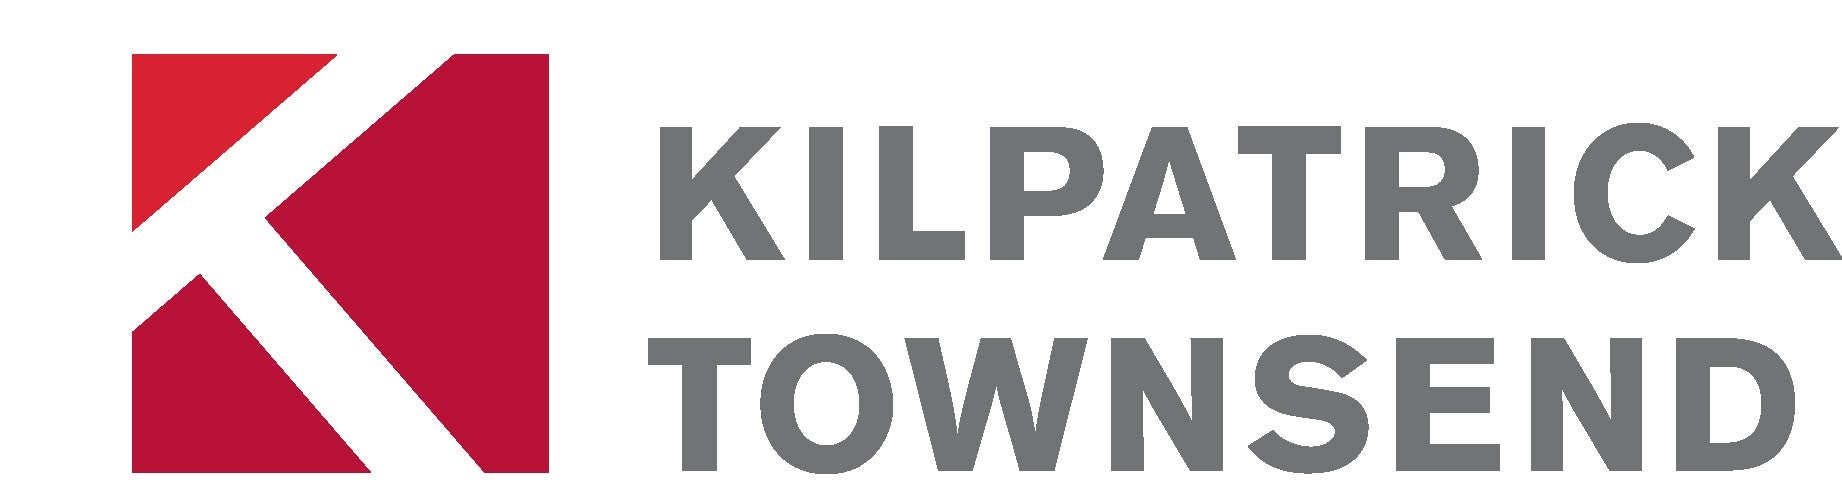 kipatrick townsend